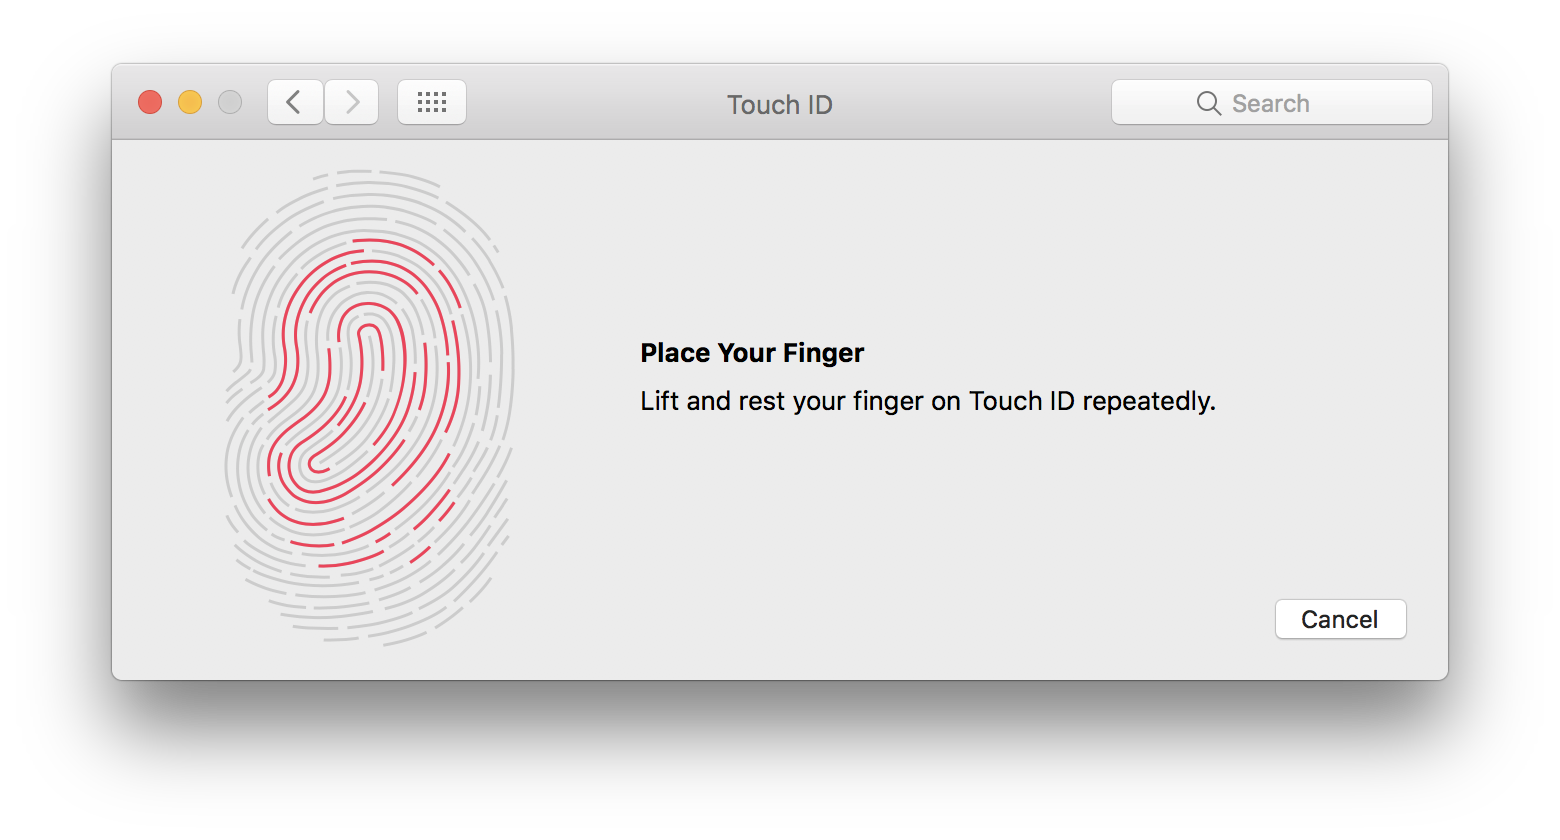 macos-system-preferences-touch-id-scan-fingerprint-mac-screenshot-001